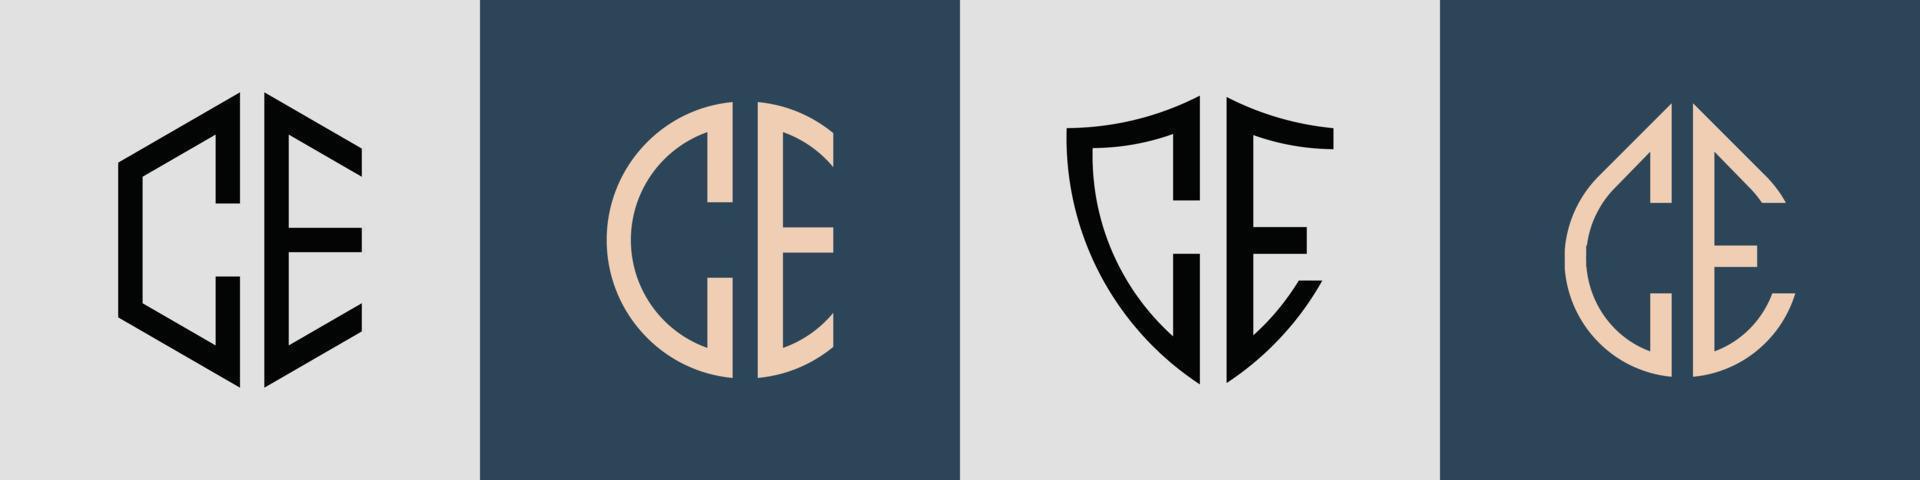 Creative simple Initial Letters CE Logo Designs Bundle. vector